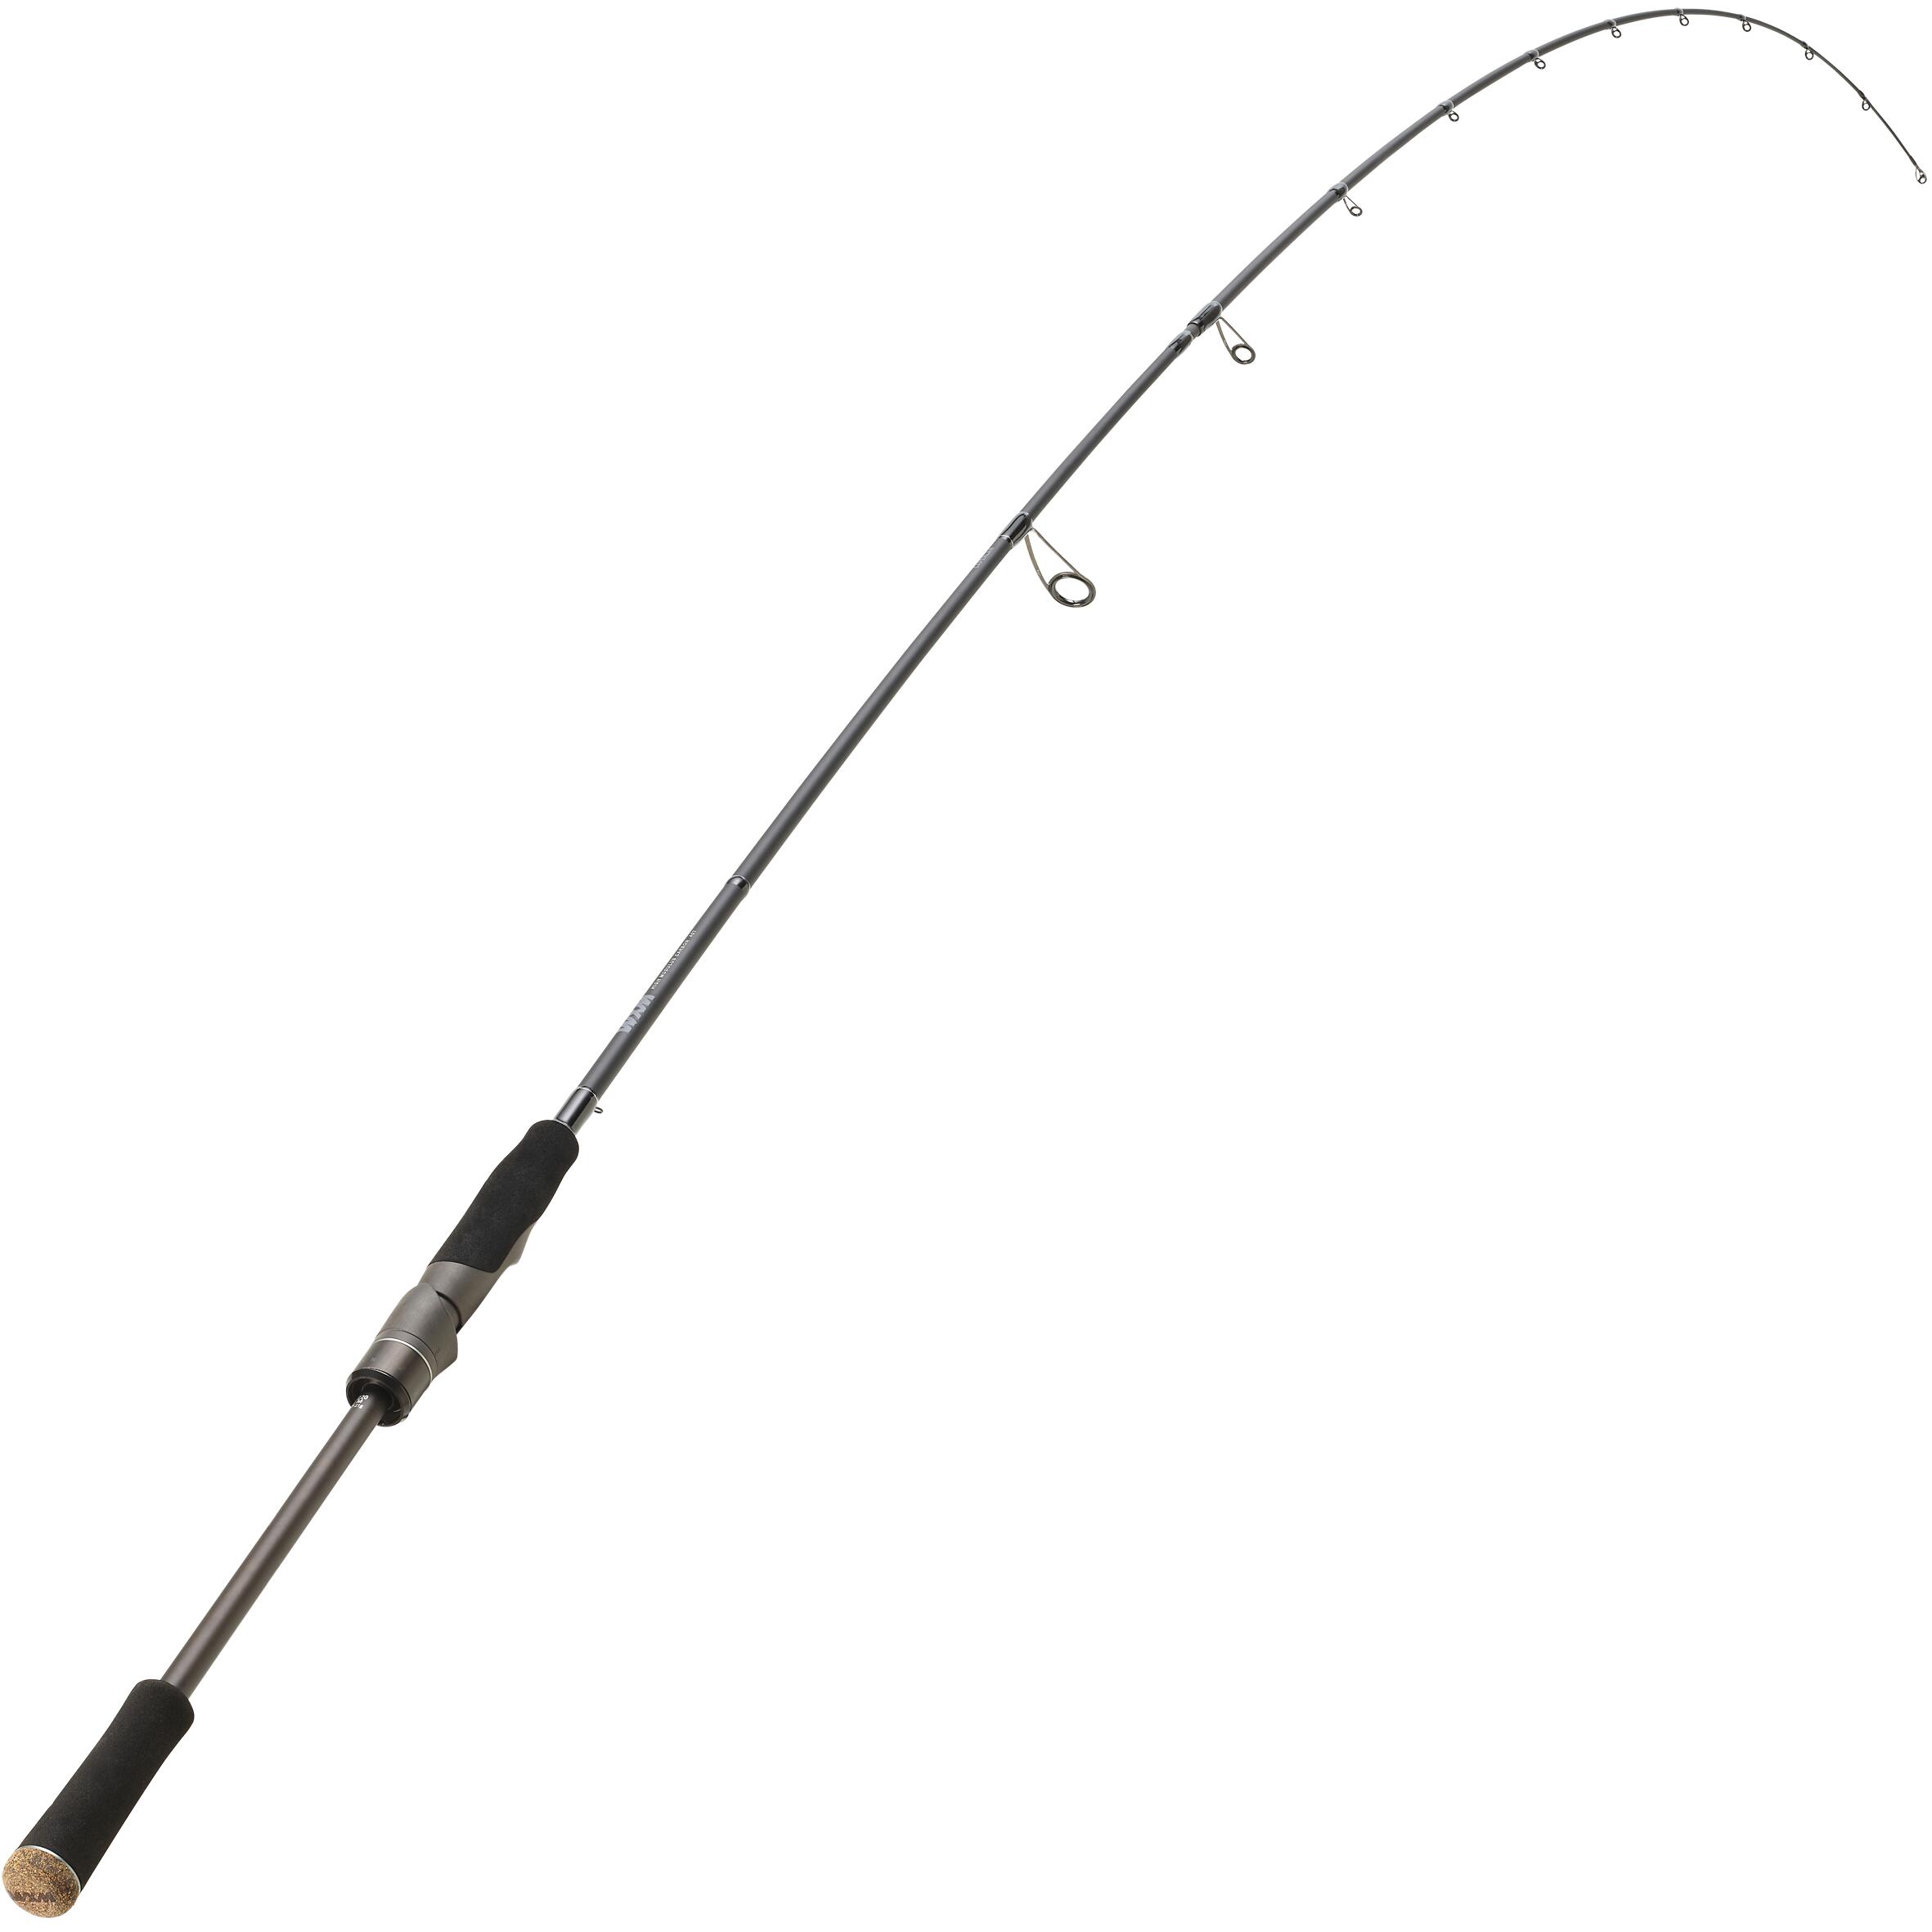 LURE FISHING ROD WXM-9 220M 2/11